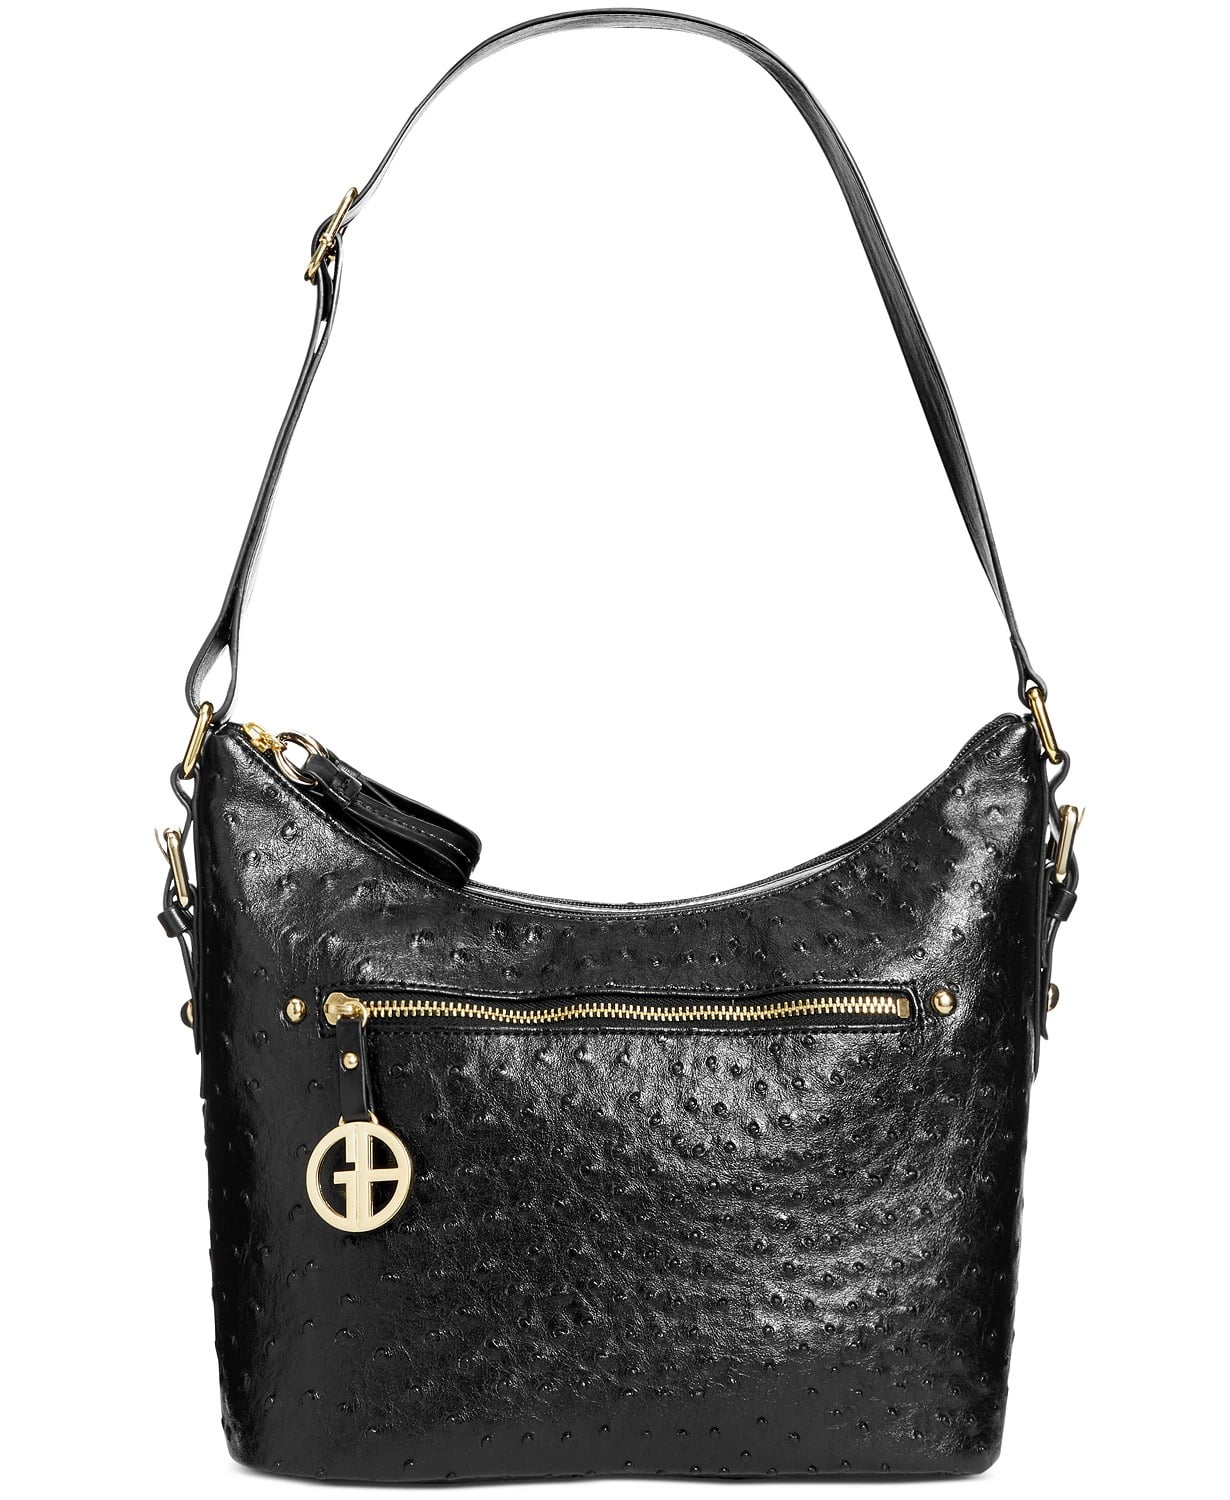 Giani Bernini Bags  Handbags for Women for Sale  eBay